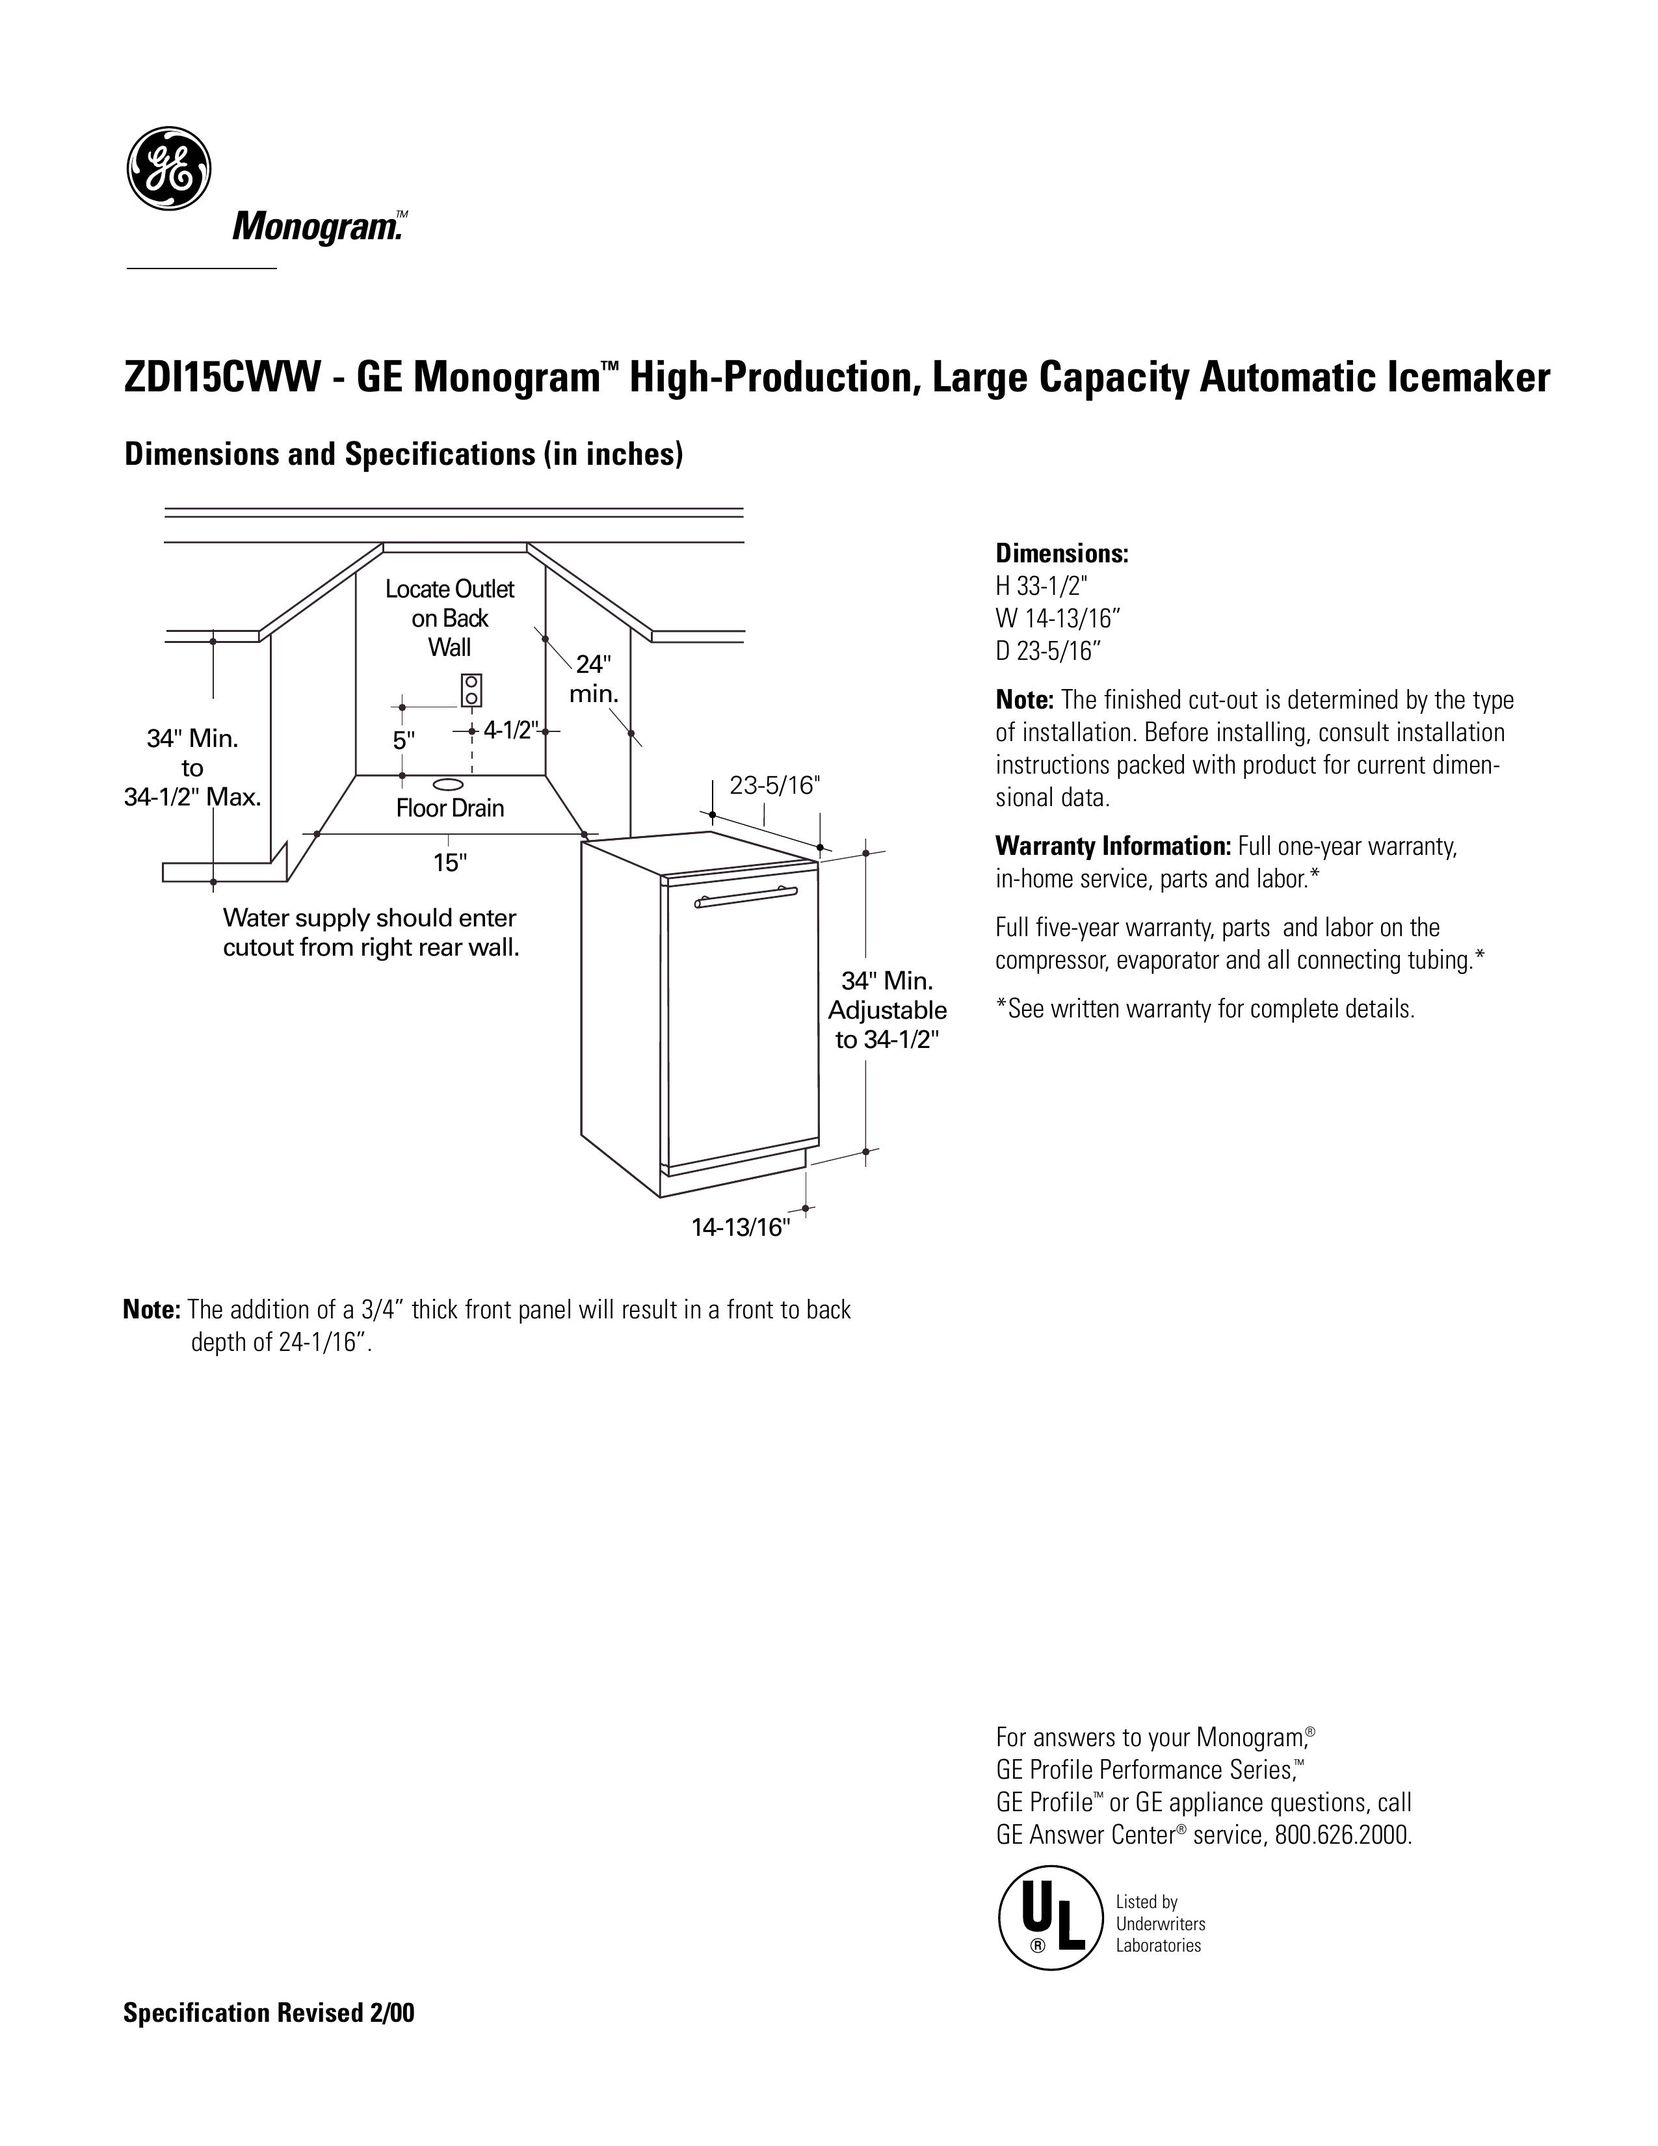 GE Monogram ZDI15CWW Ice Maker User Manual